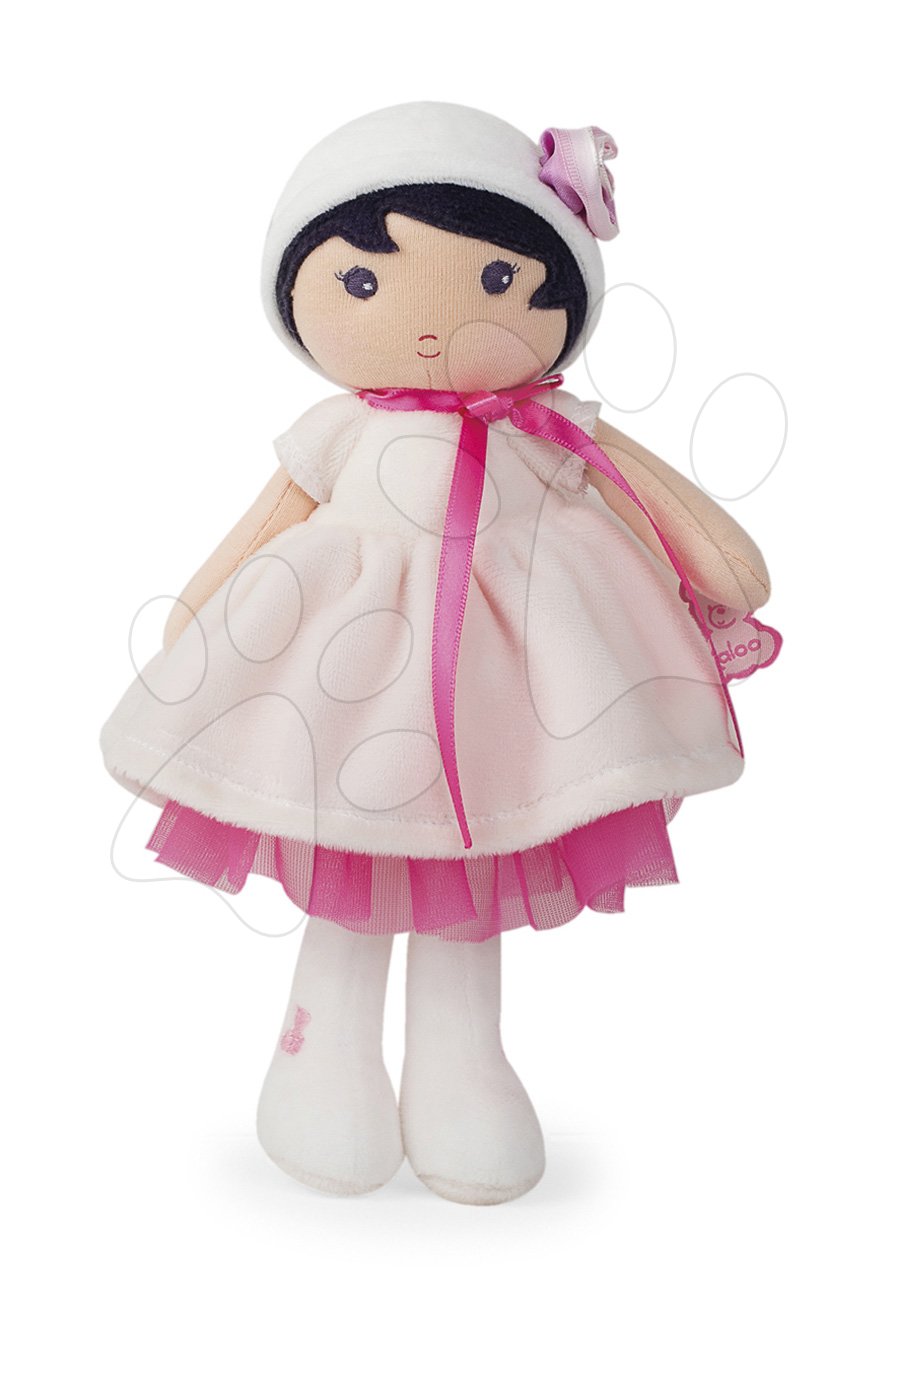 Kaloo detská bábika Perle K Tendresse 25 cm 962082 biela